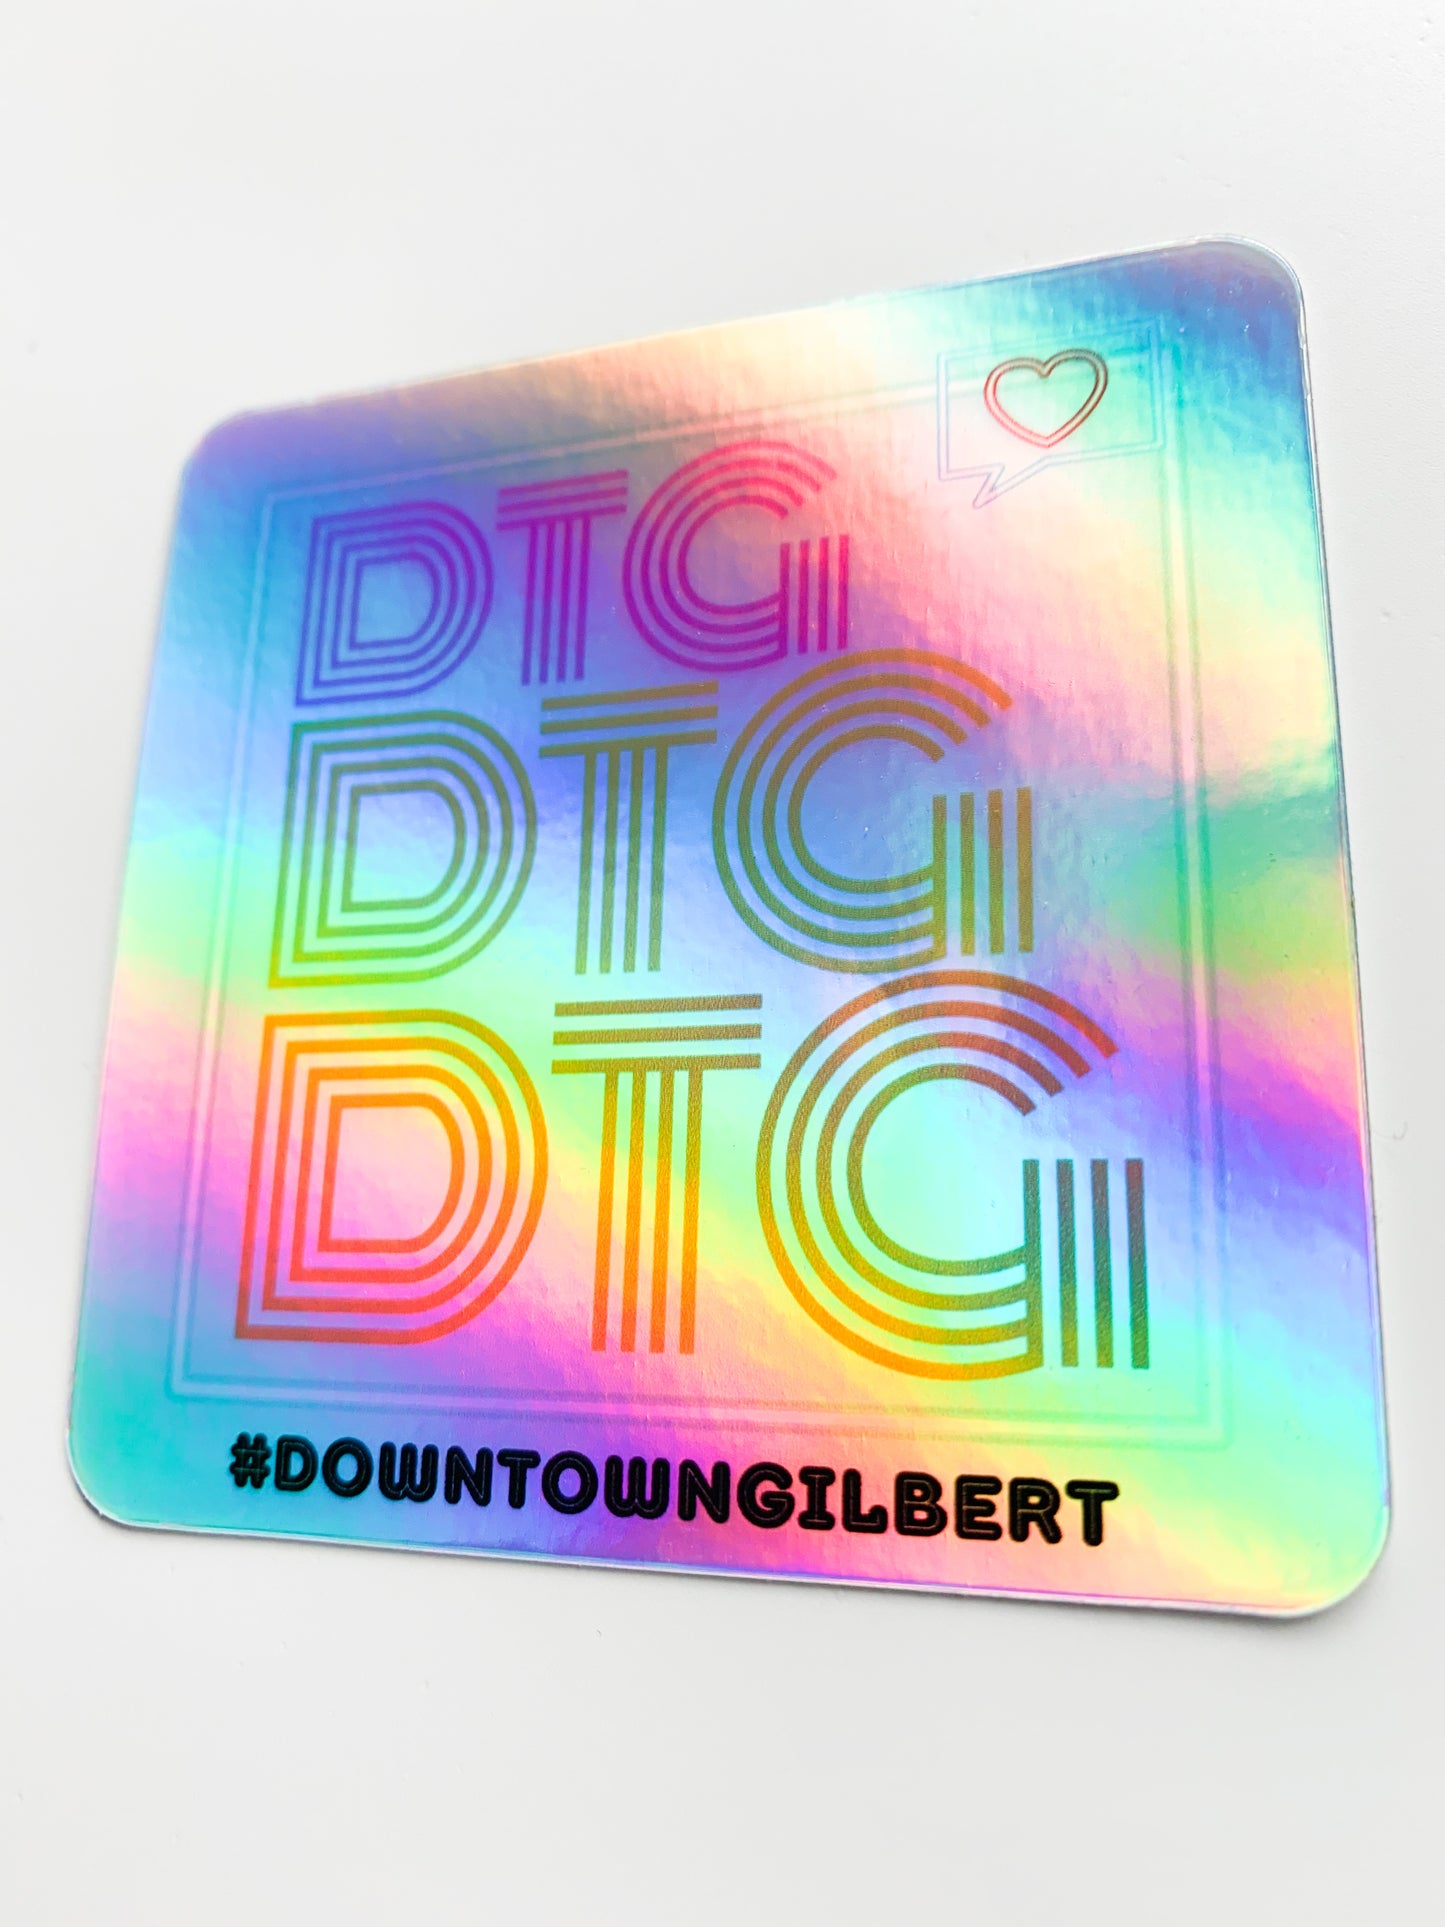 DTG Downtown Gilbert Hologram Sticker